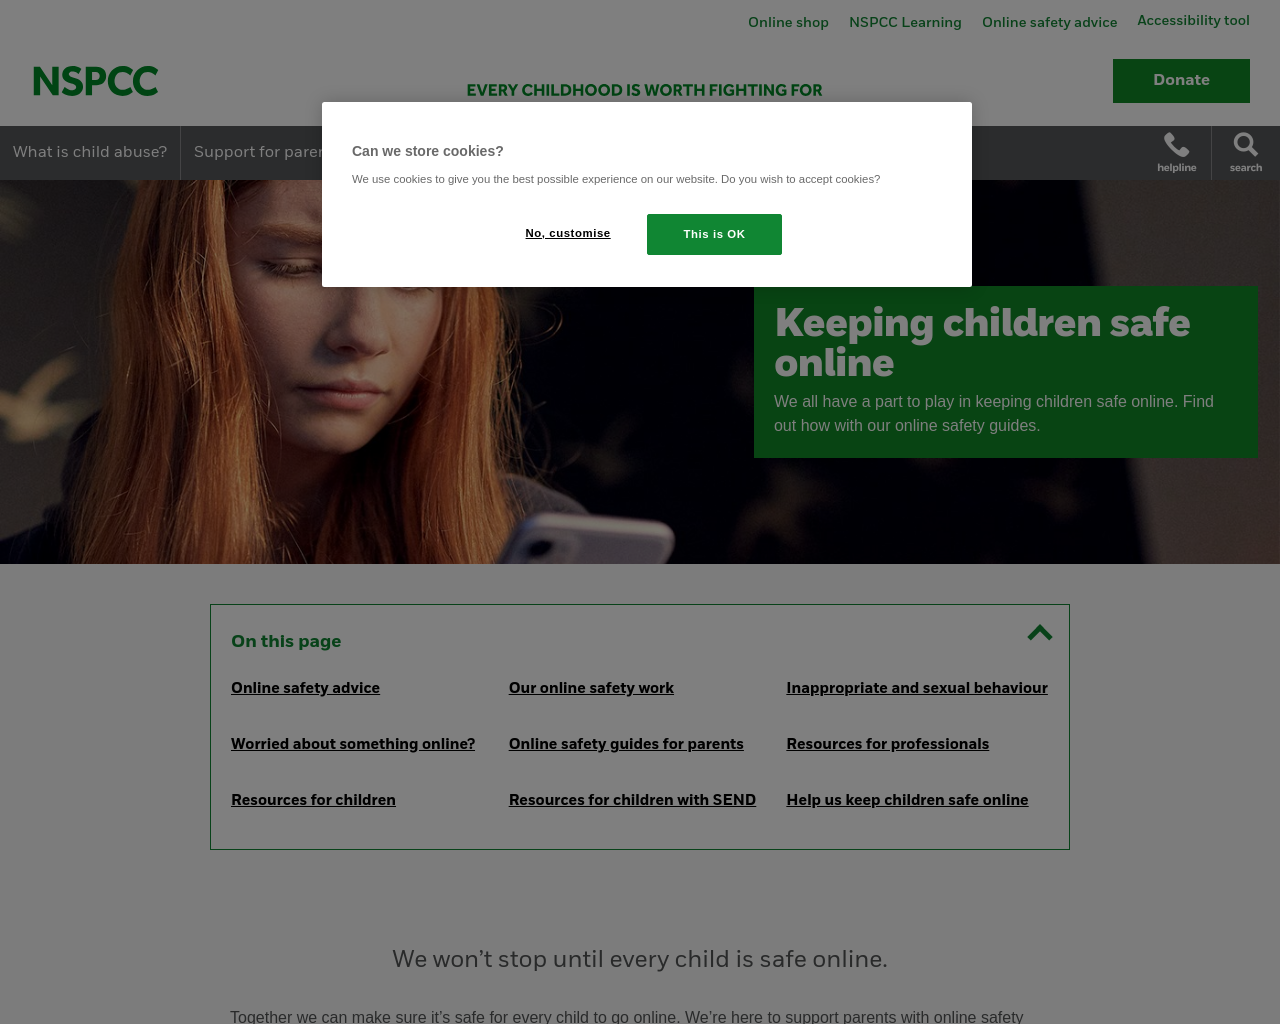 NSPCC Online Safety